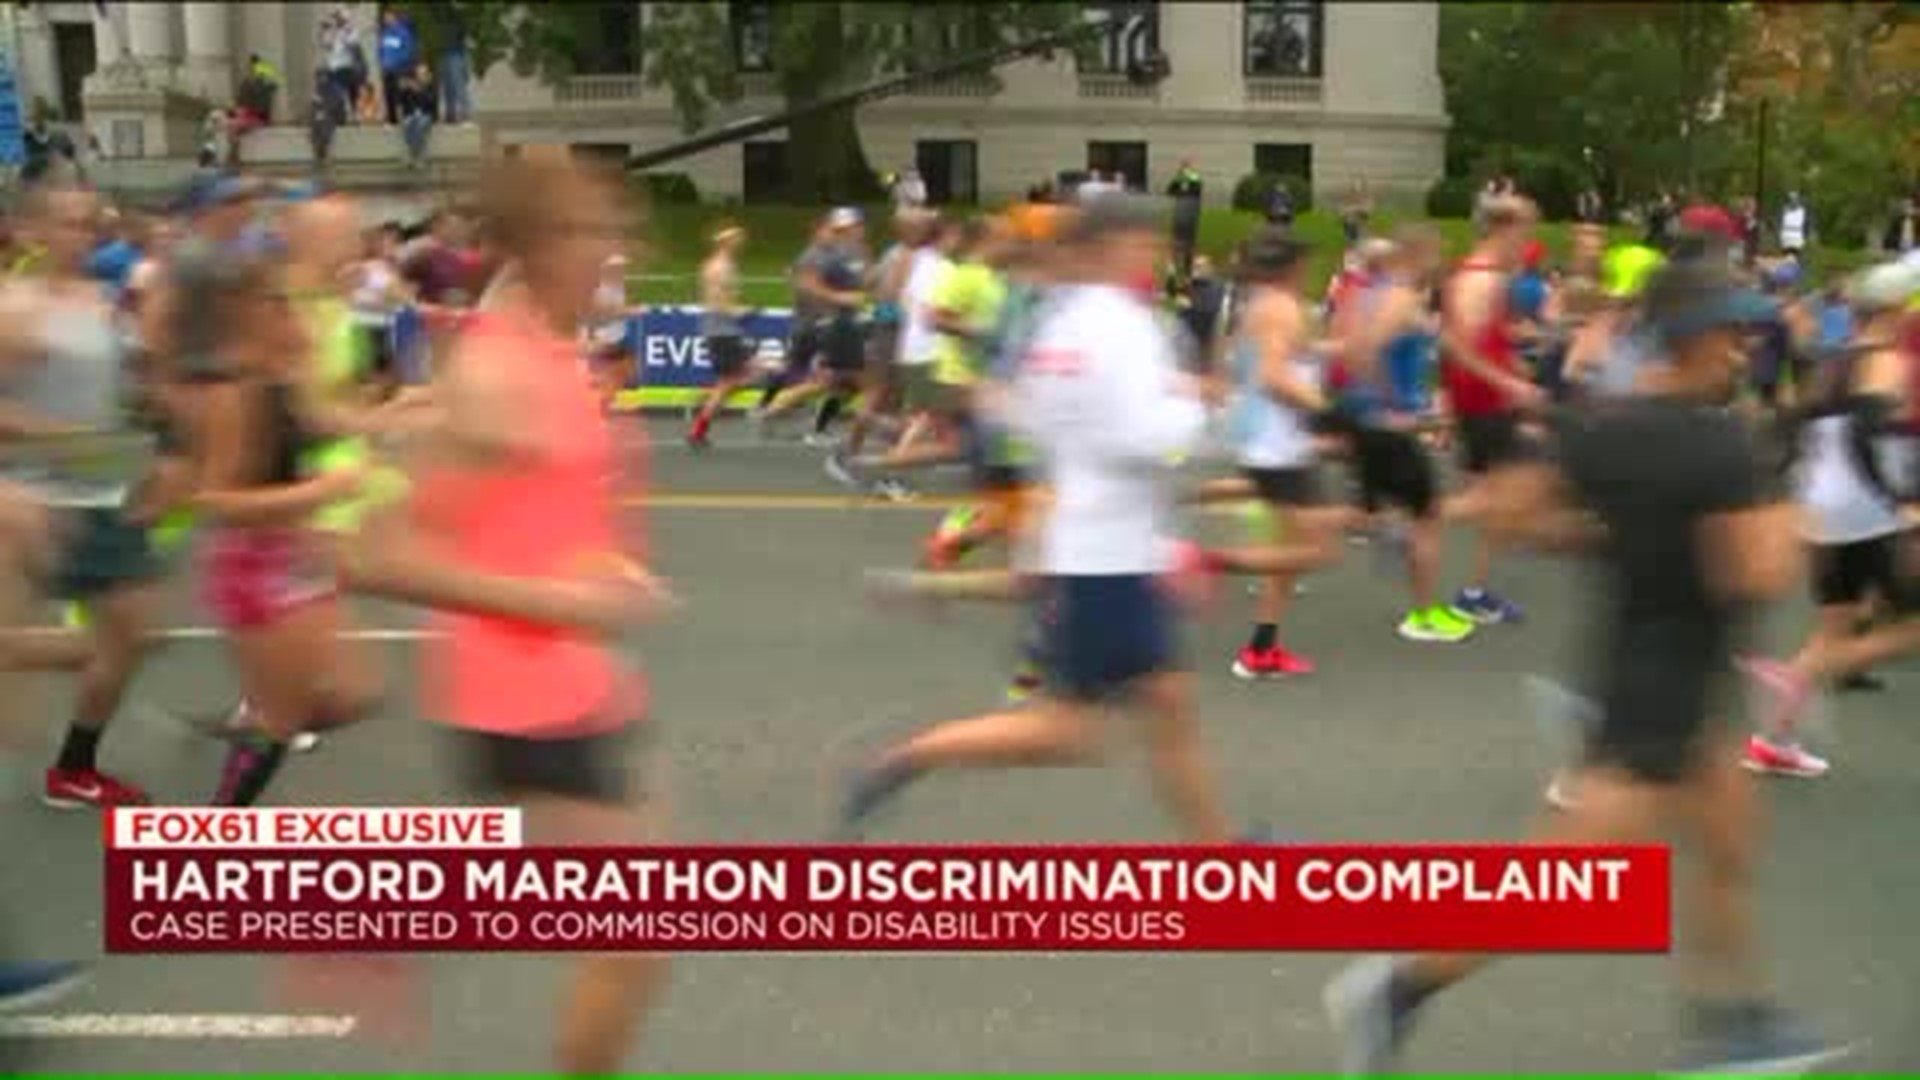 Hartford marathon foundation accused of discrimination against those with disabilities